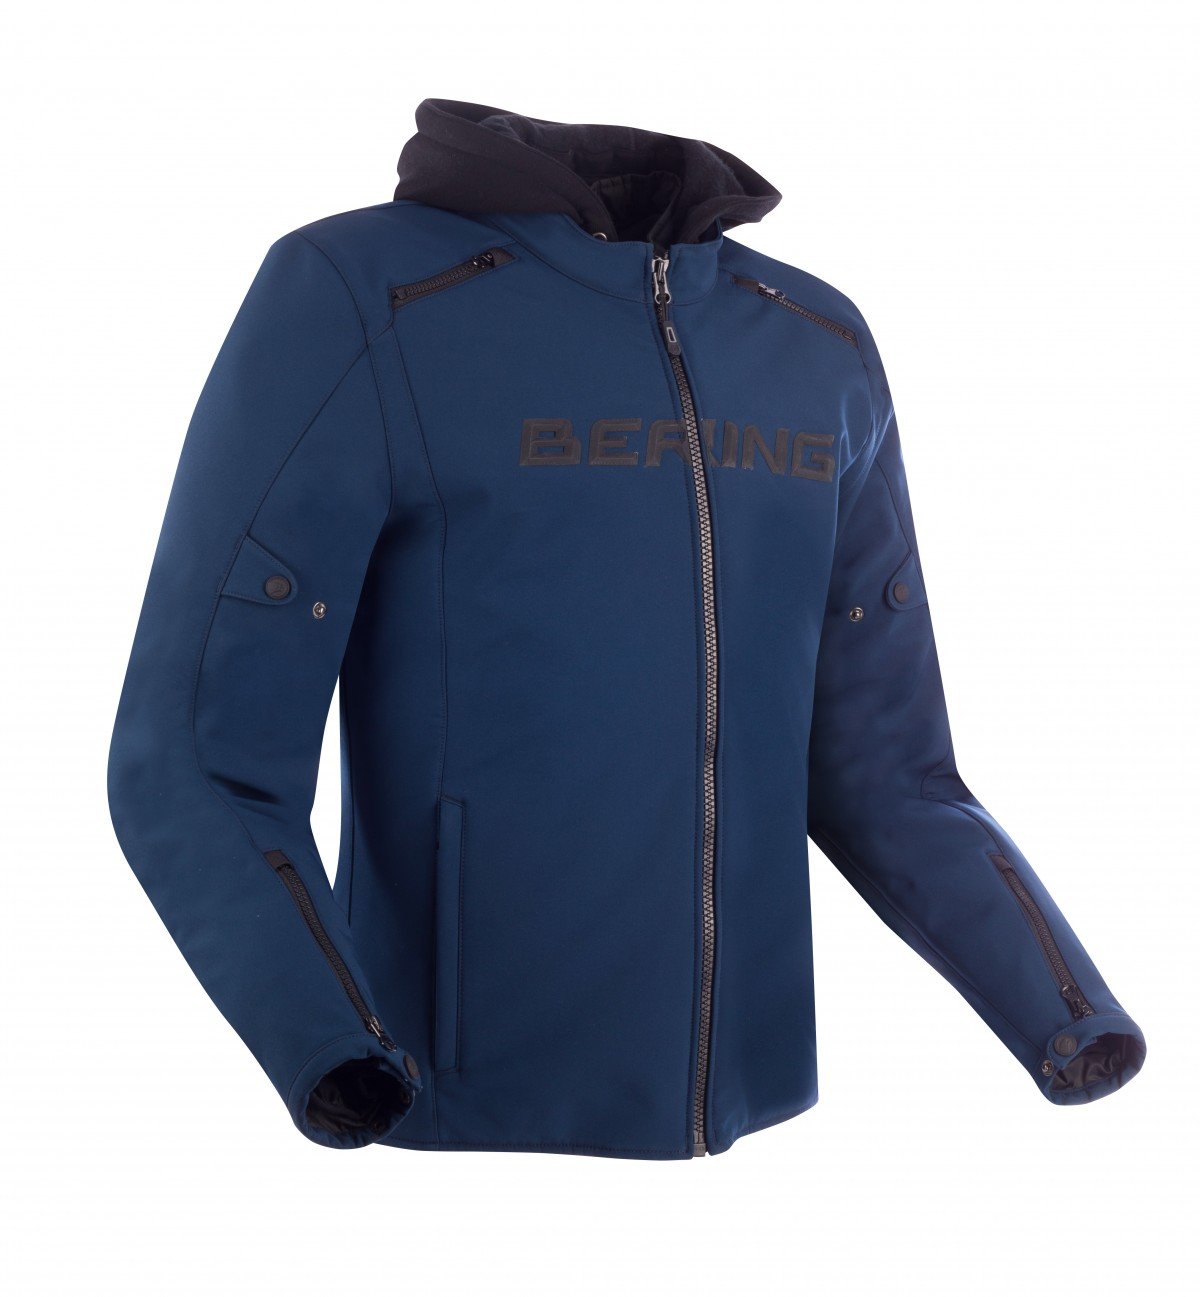 Image of Bering Elite Jacket Navy Blue Size S ID 3660815170250